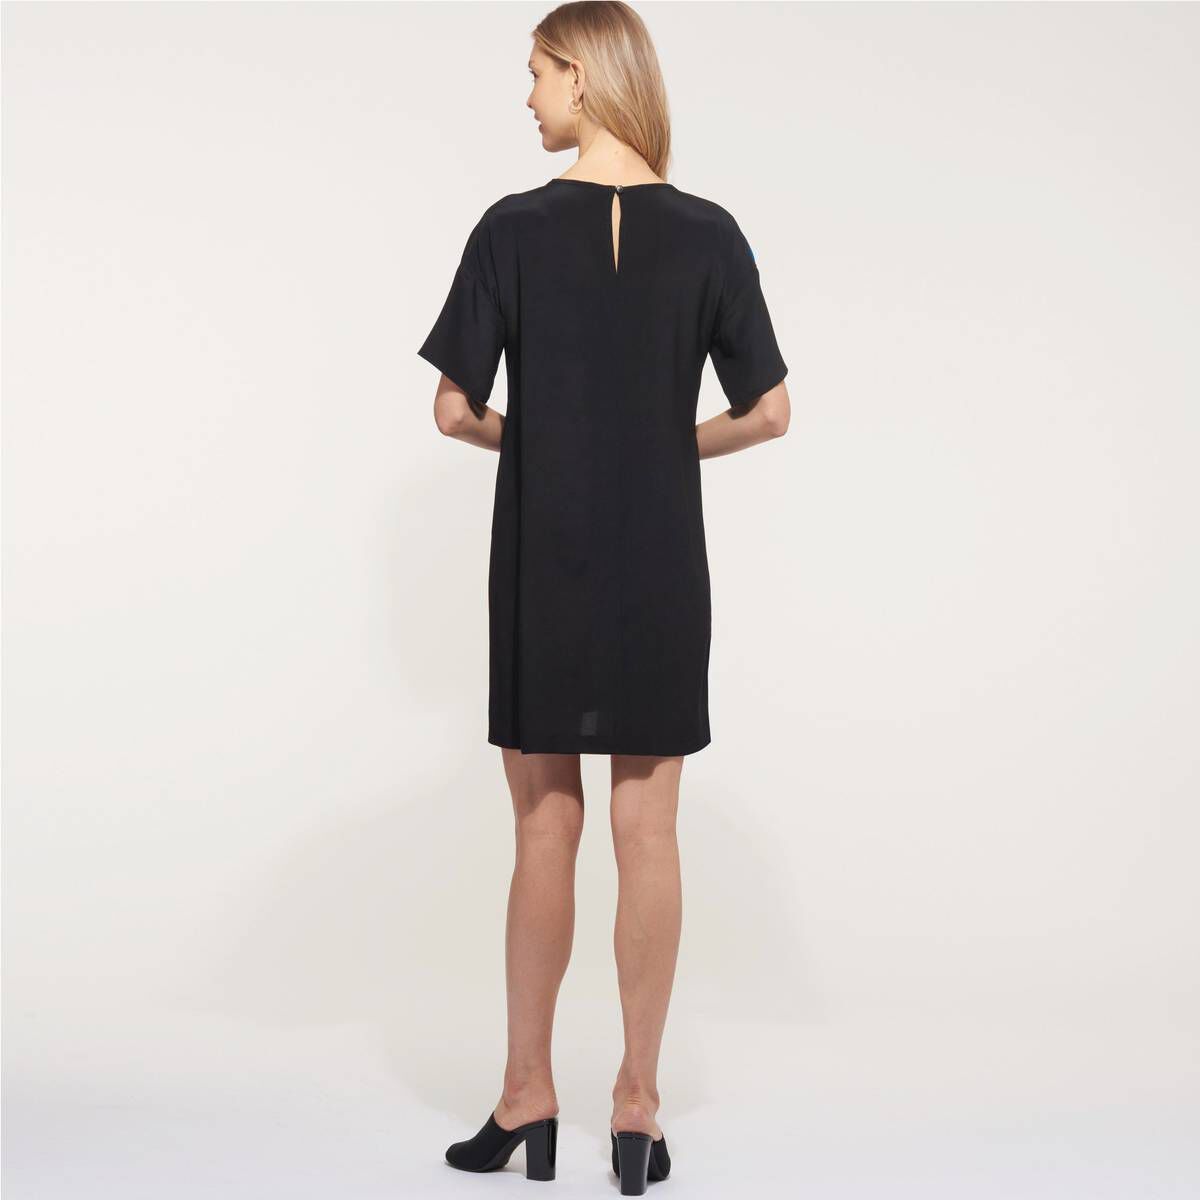 New Look Women's Asymmetrical Dress Sewing Pattern N6596 | Hobbycraft